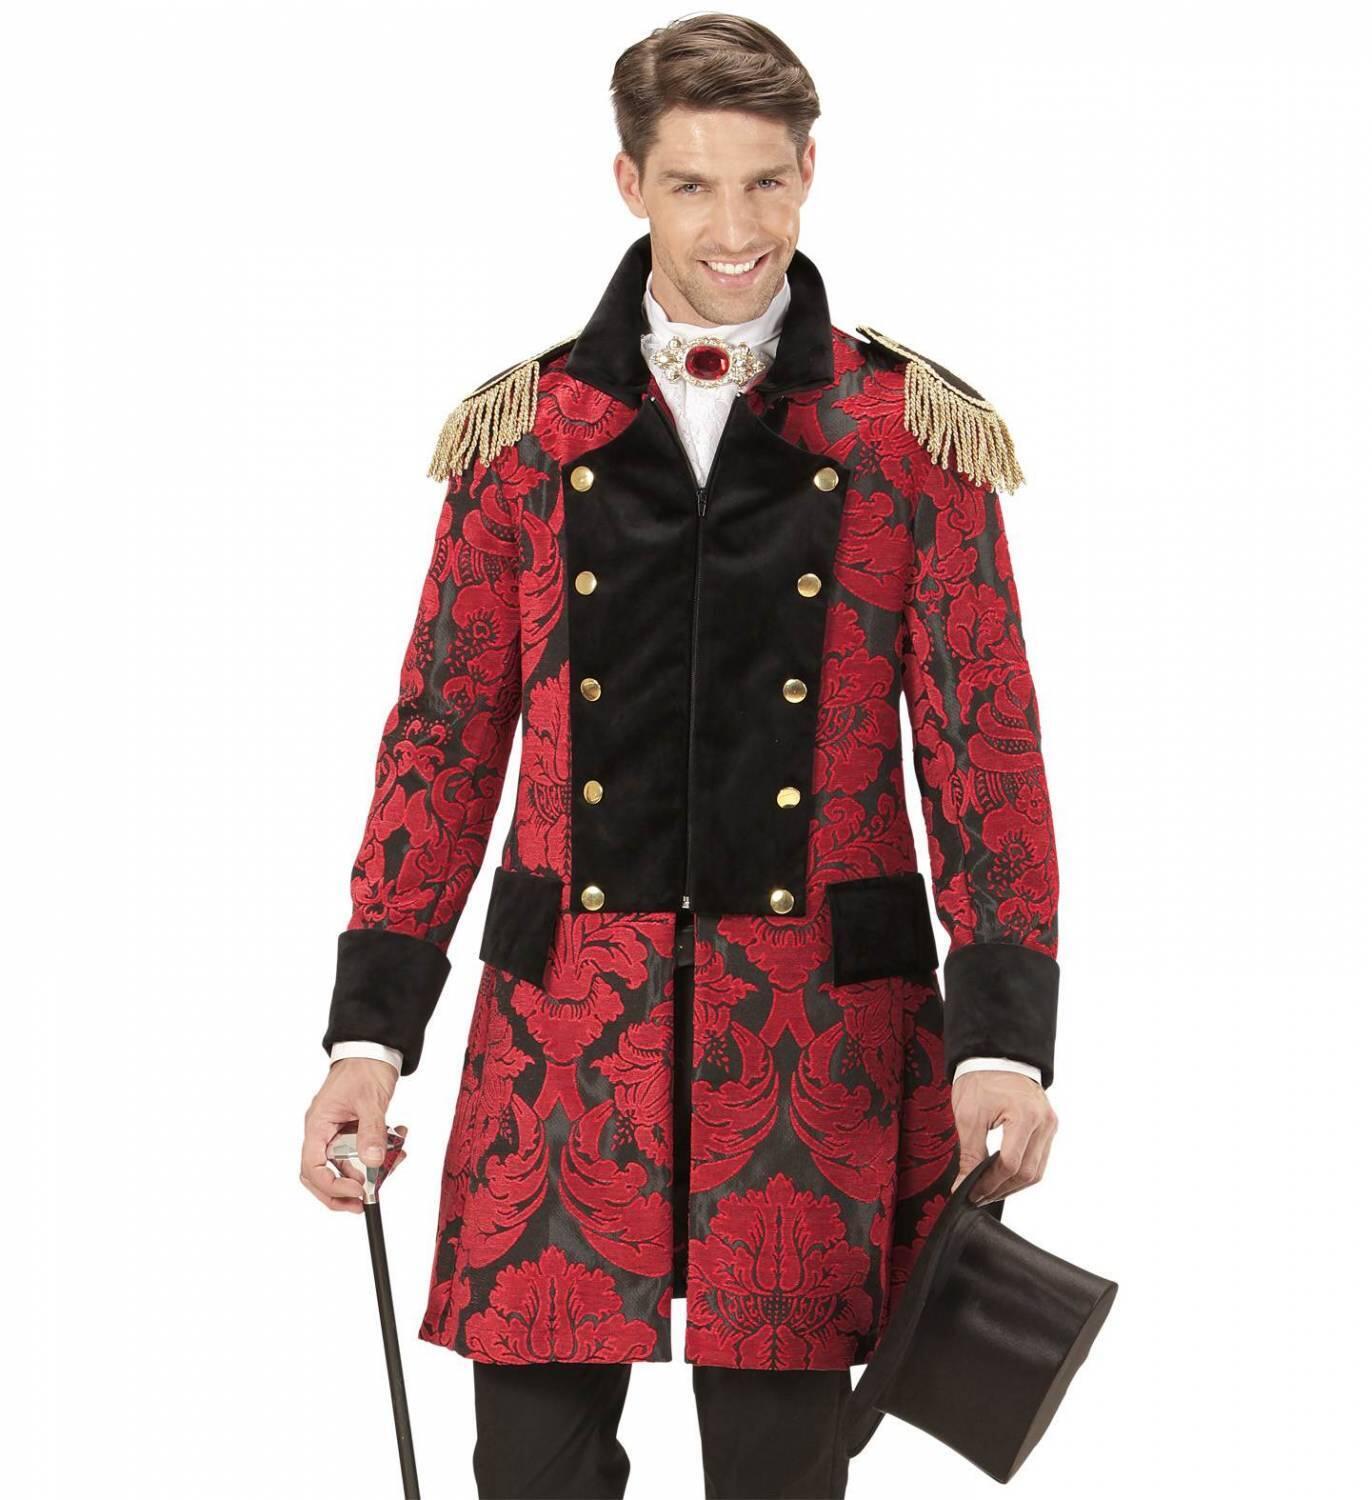 Karneval Herren Kostüm Mantel Jacket Jaquard rot schwarz